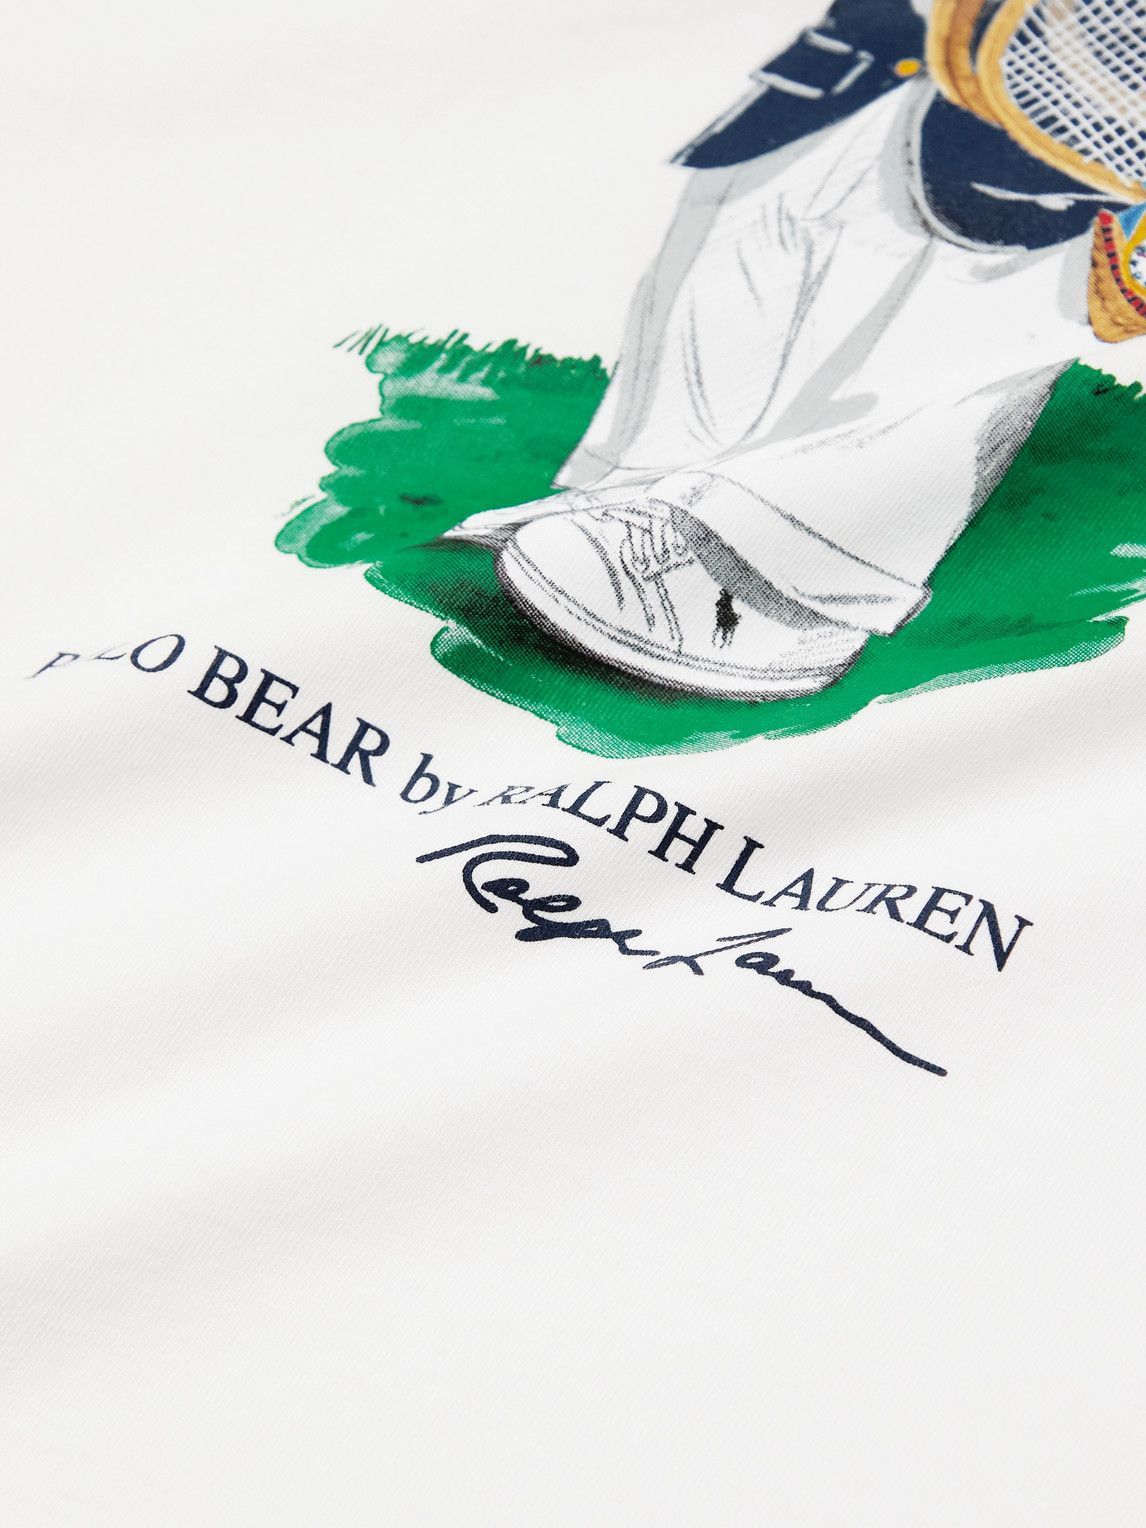 Polo Ralph Lauren - Wimbledon Printed Cotton-Jersey T-Shirt - White